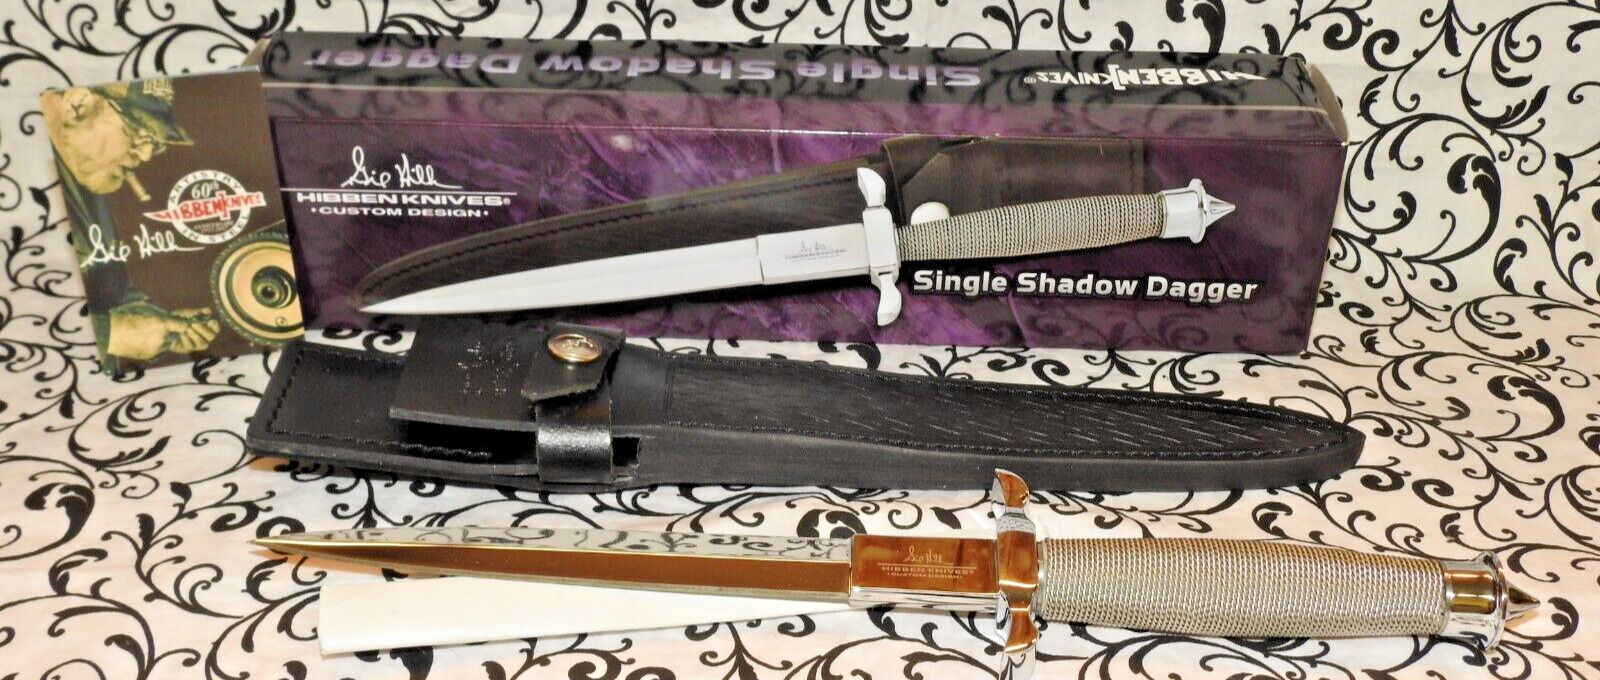 Gil Hibben Single Shadow Dagger GH441 Dual Edge Fixed Blade Knife with Sheath